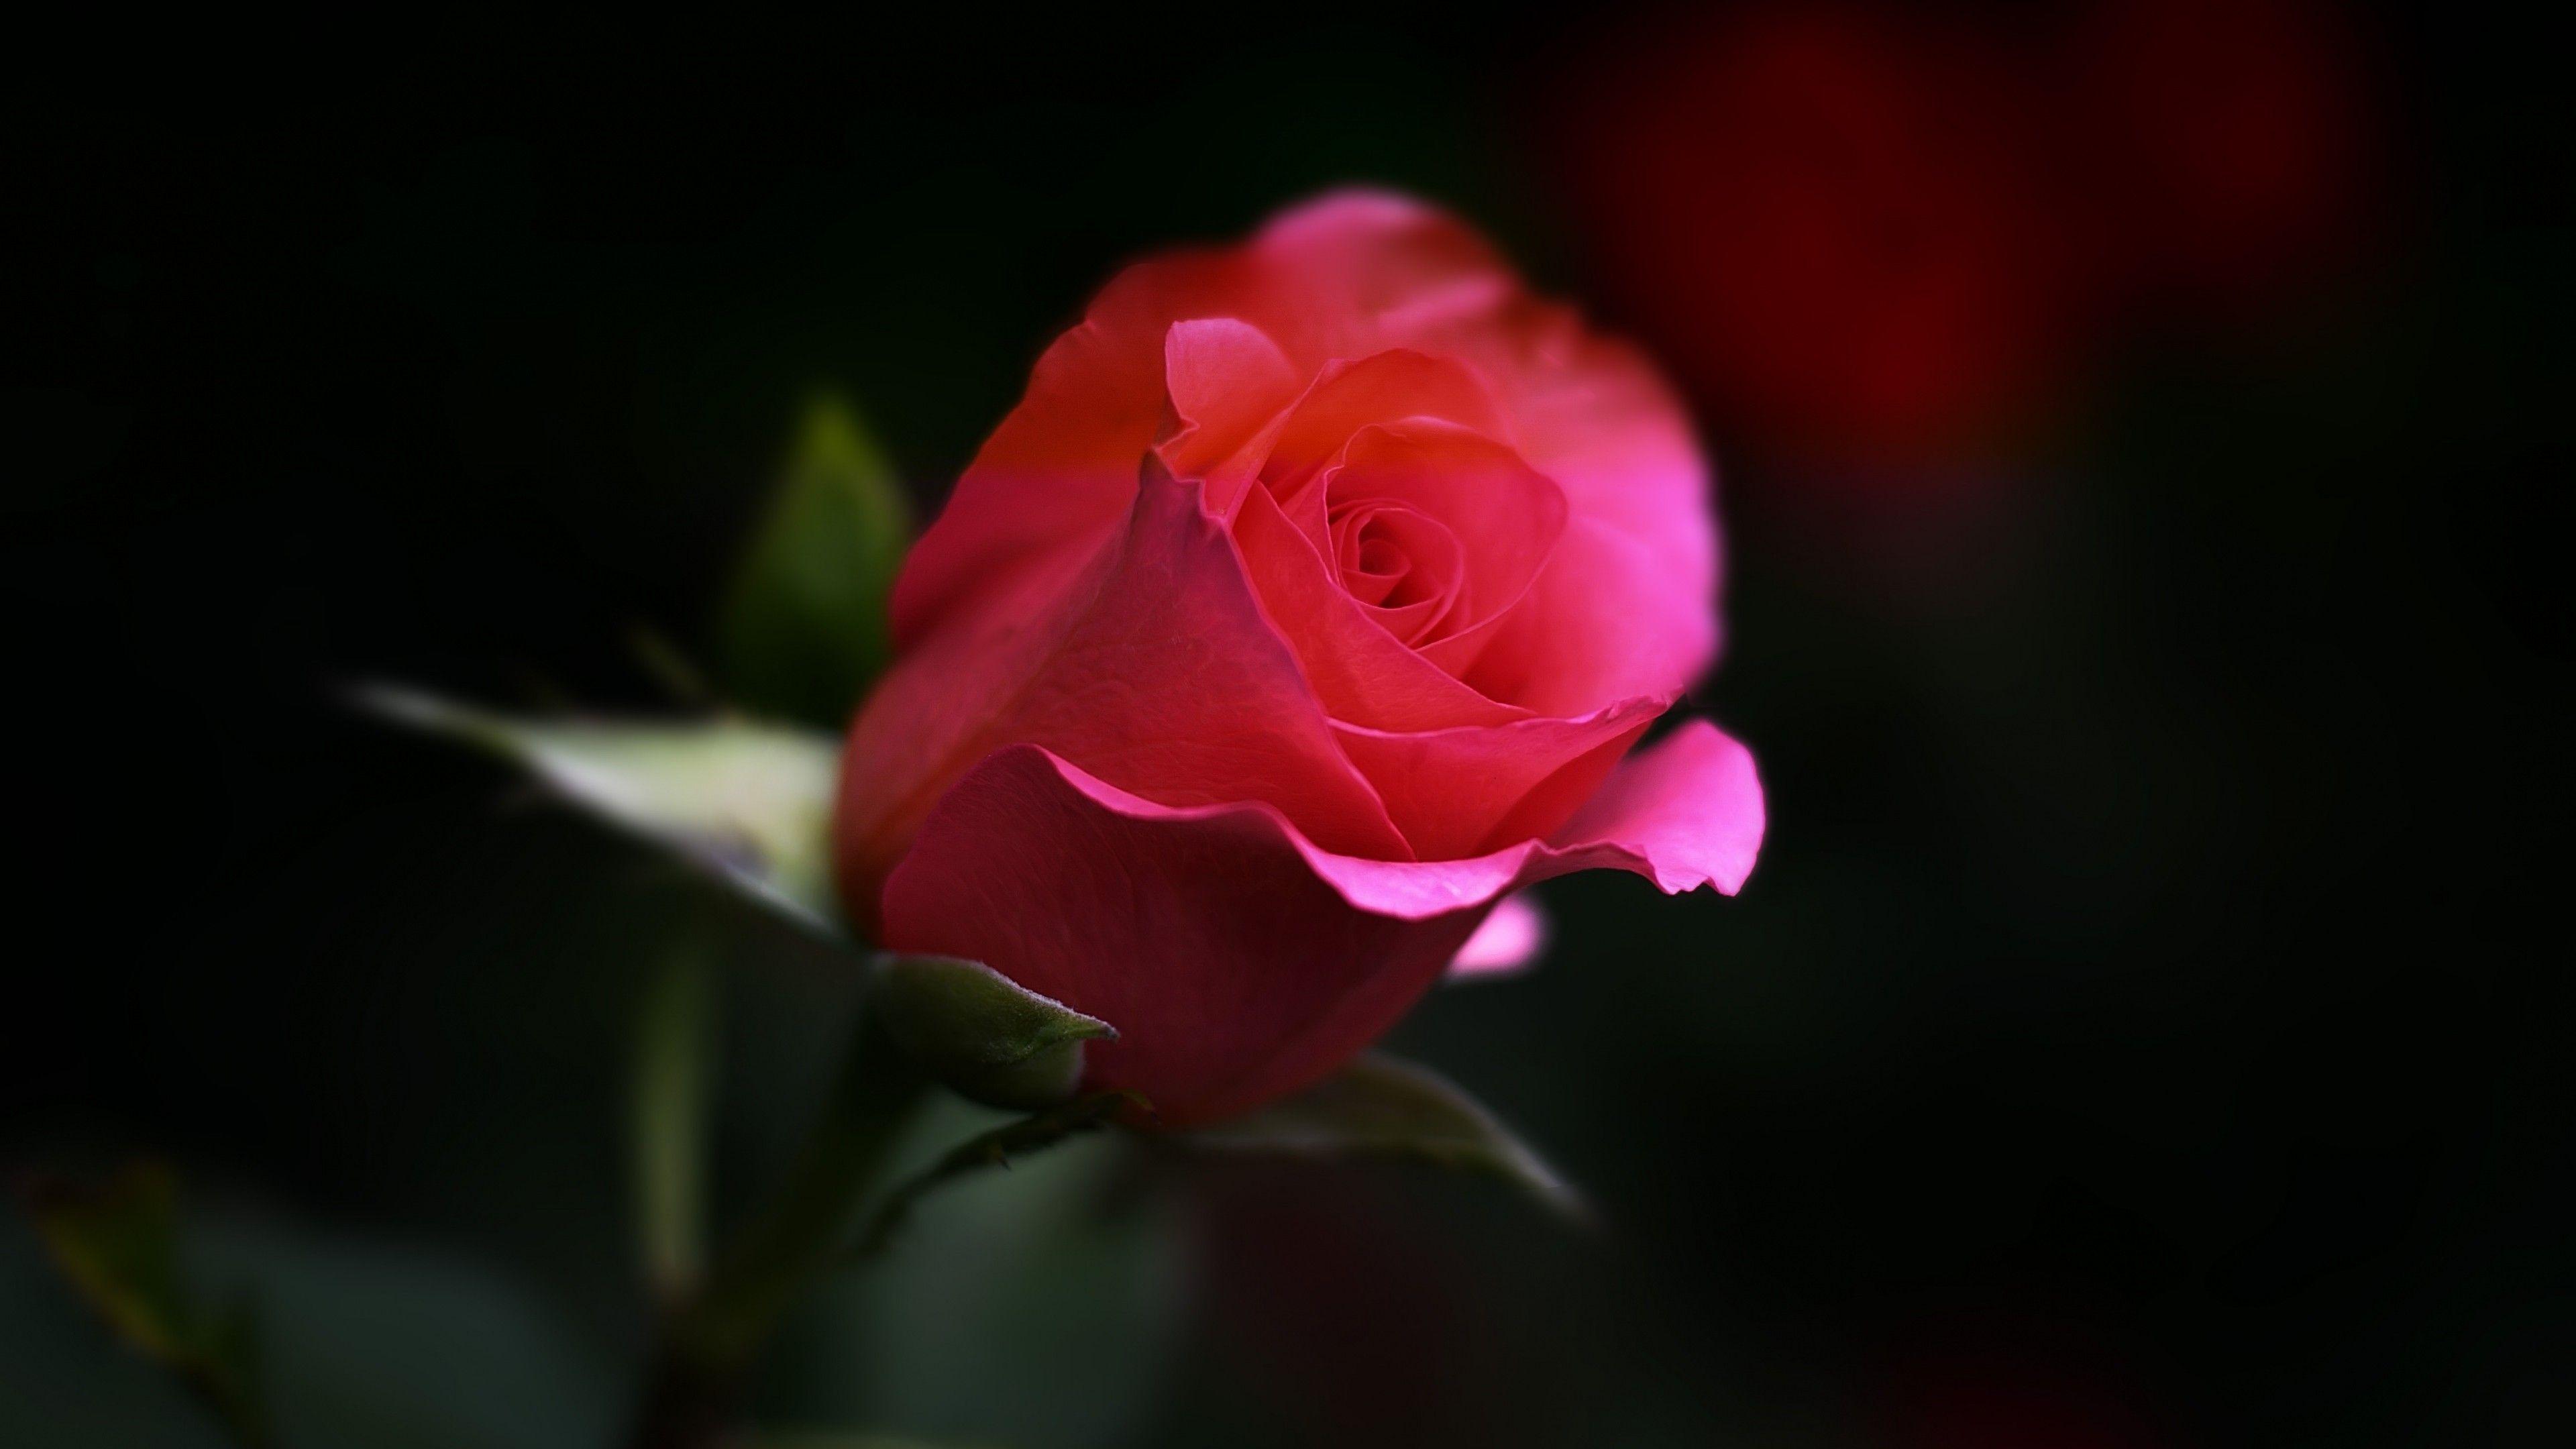 Rose Flower, HD Flowers, 4k Wallpaper, Image, Background, Photo